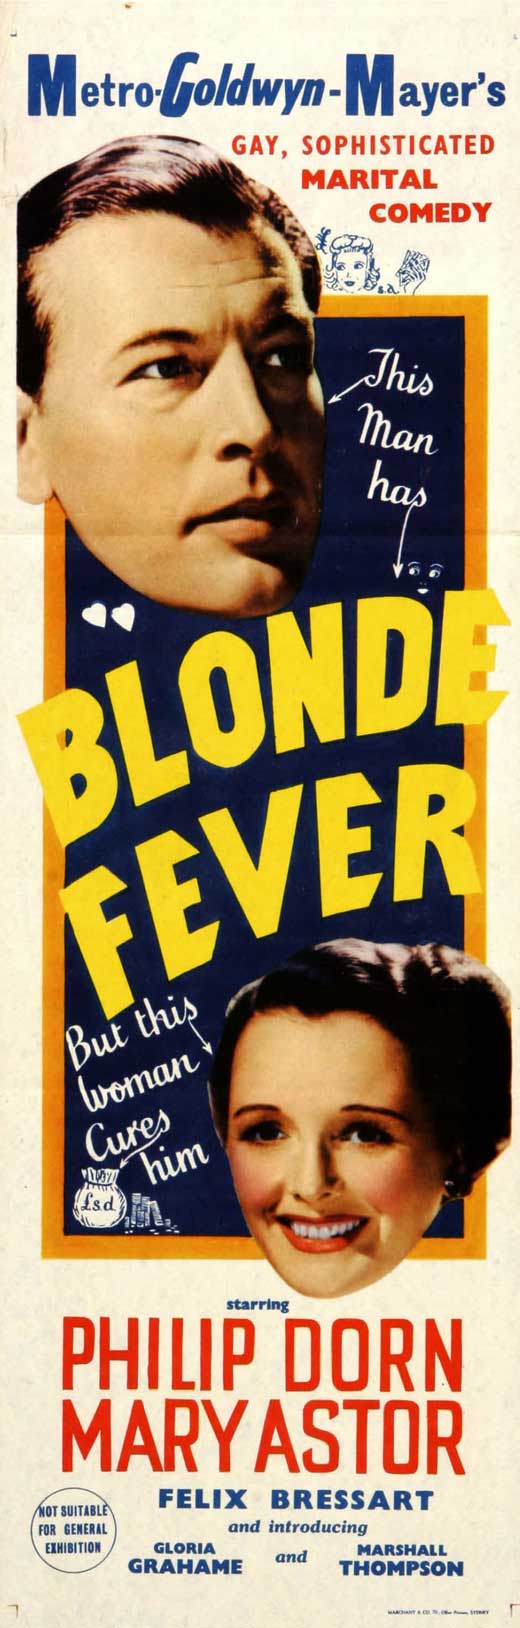 Blonde Fever movie